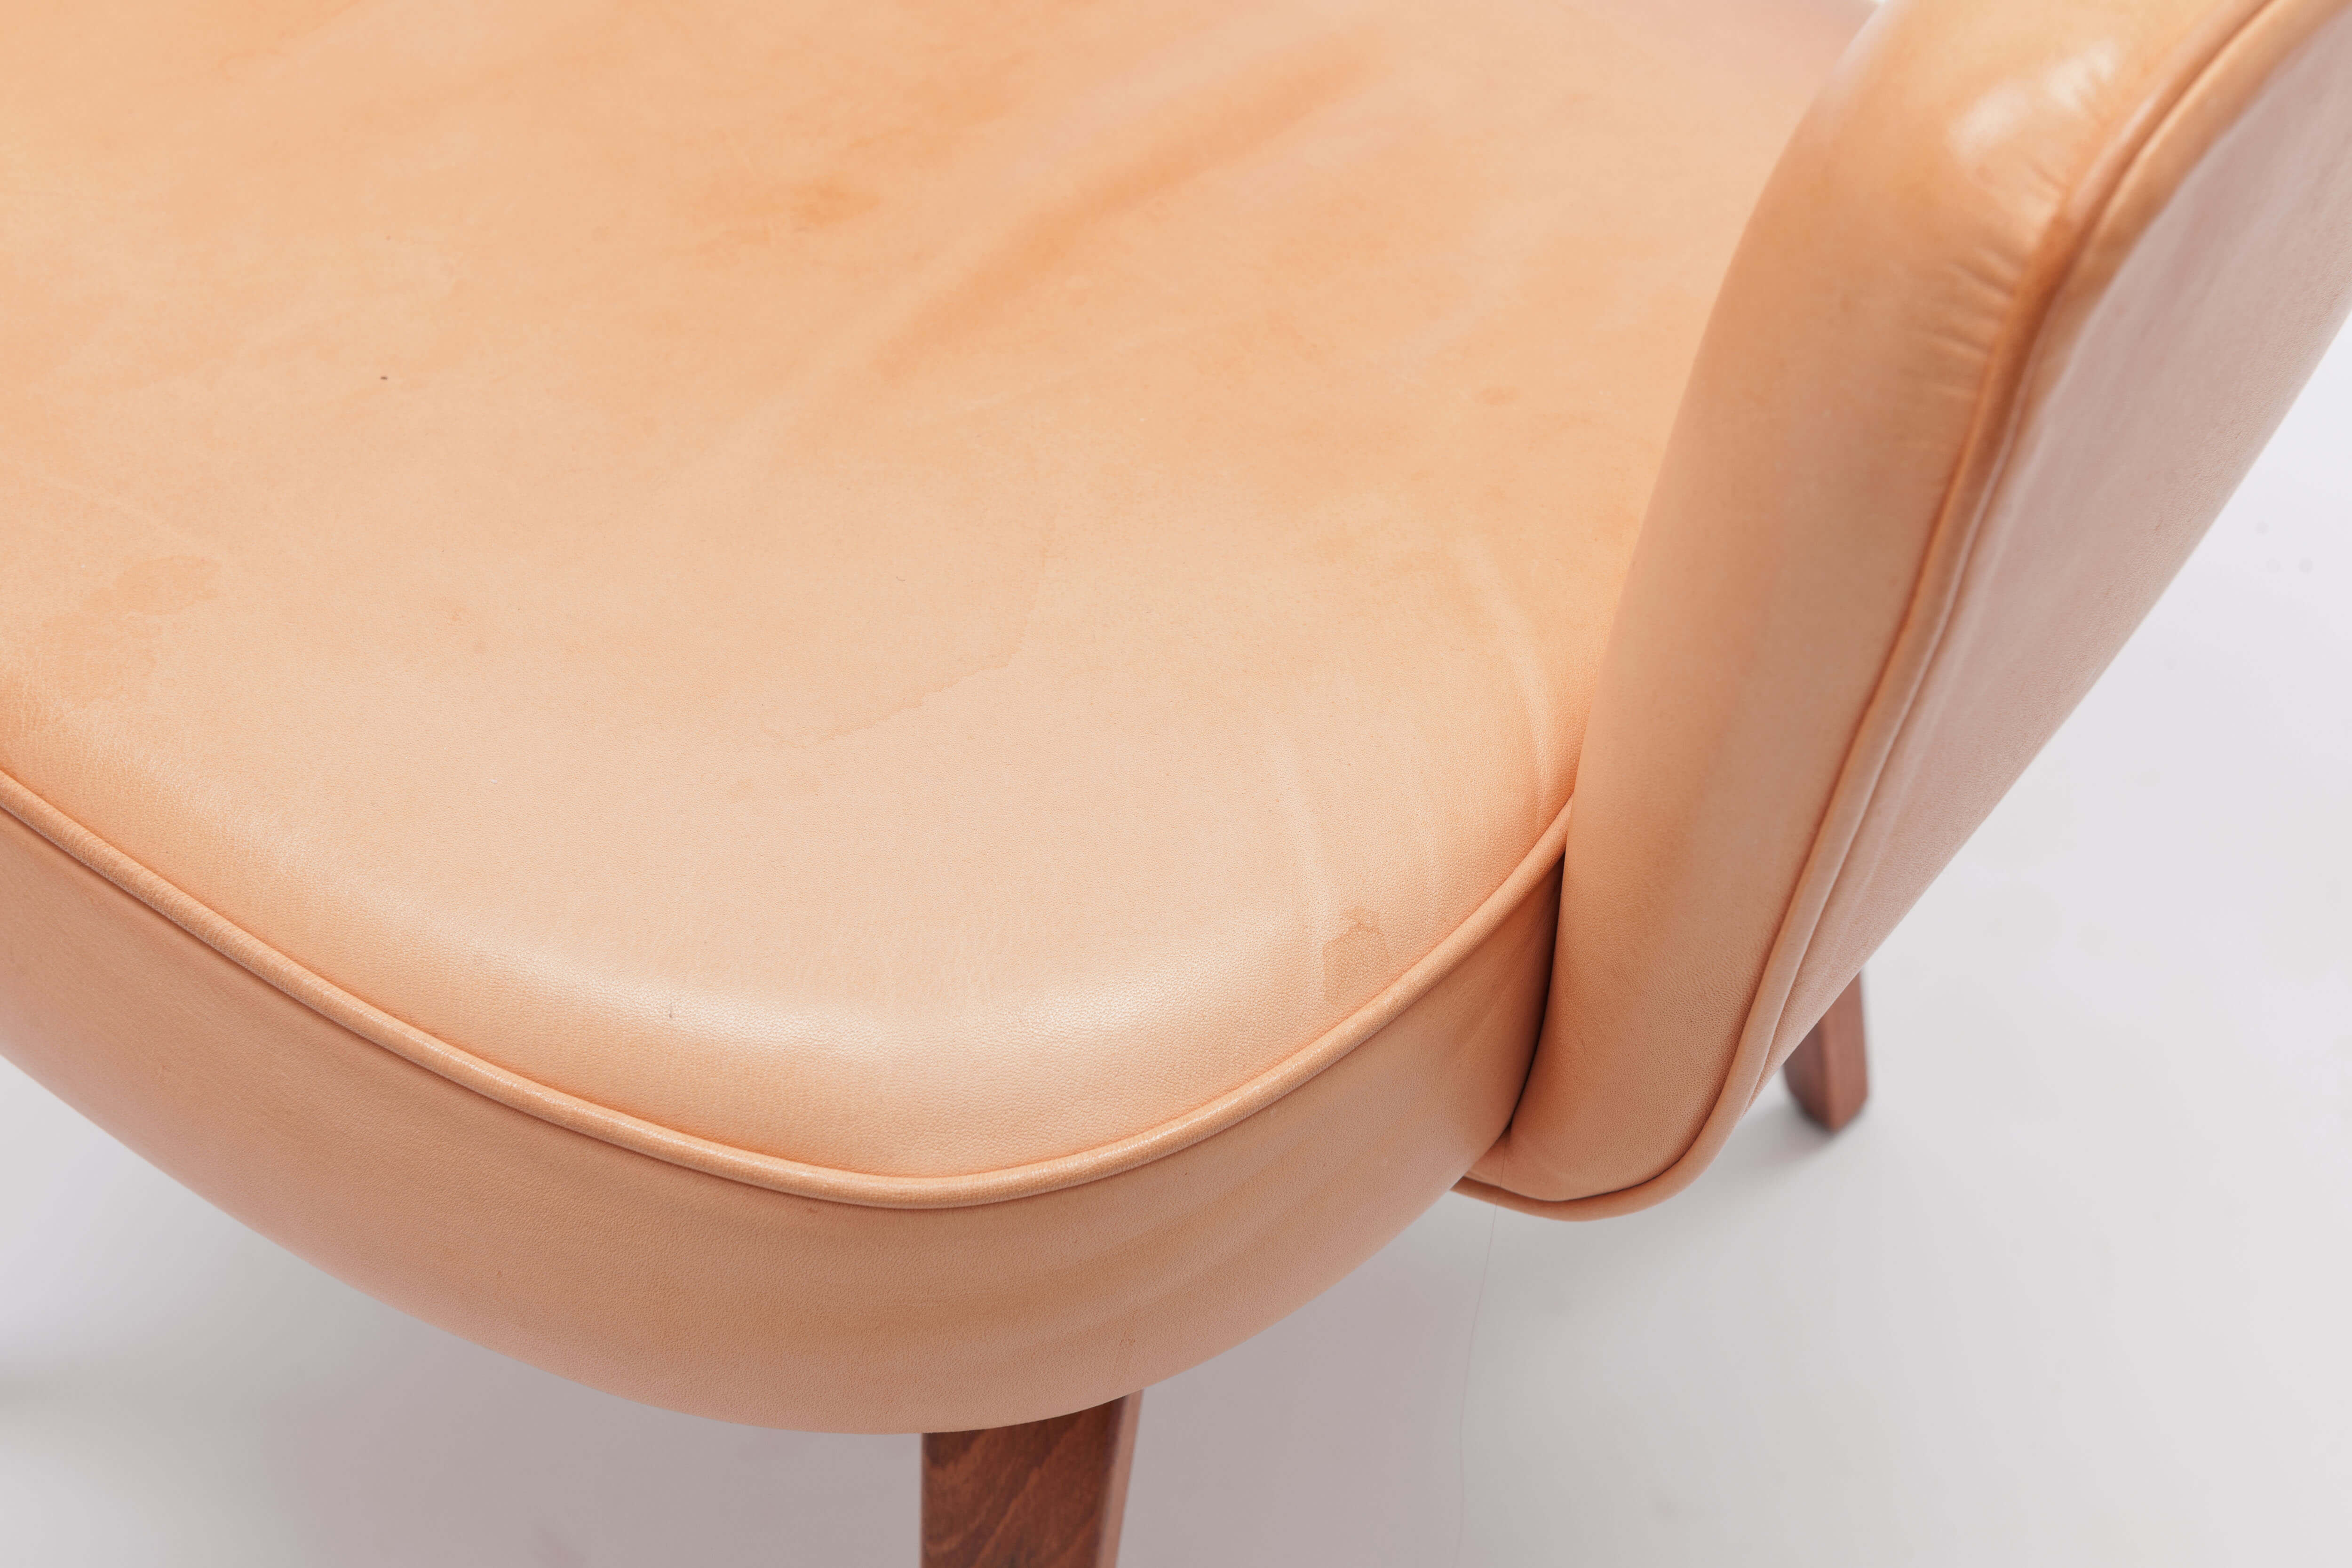 Vintage ‘Executive’ arm chair